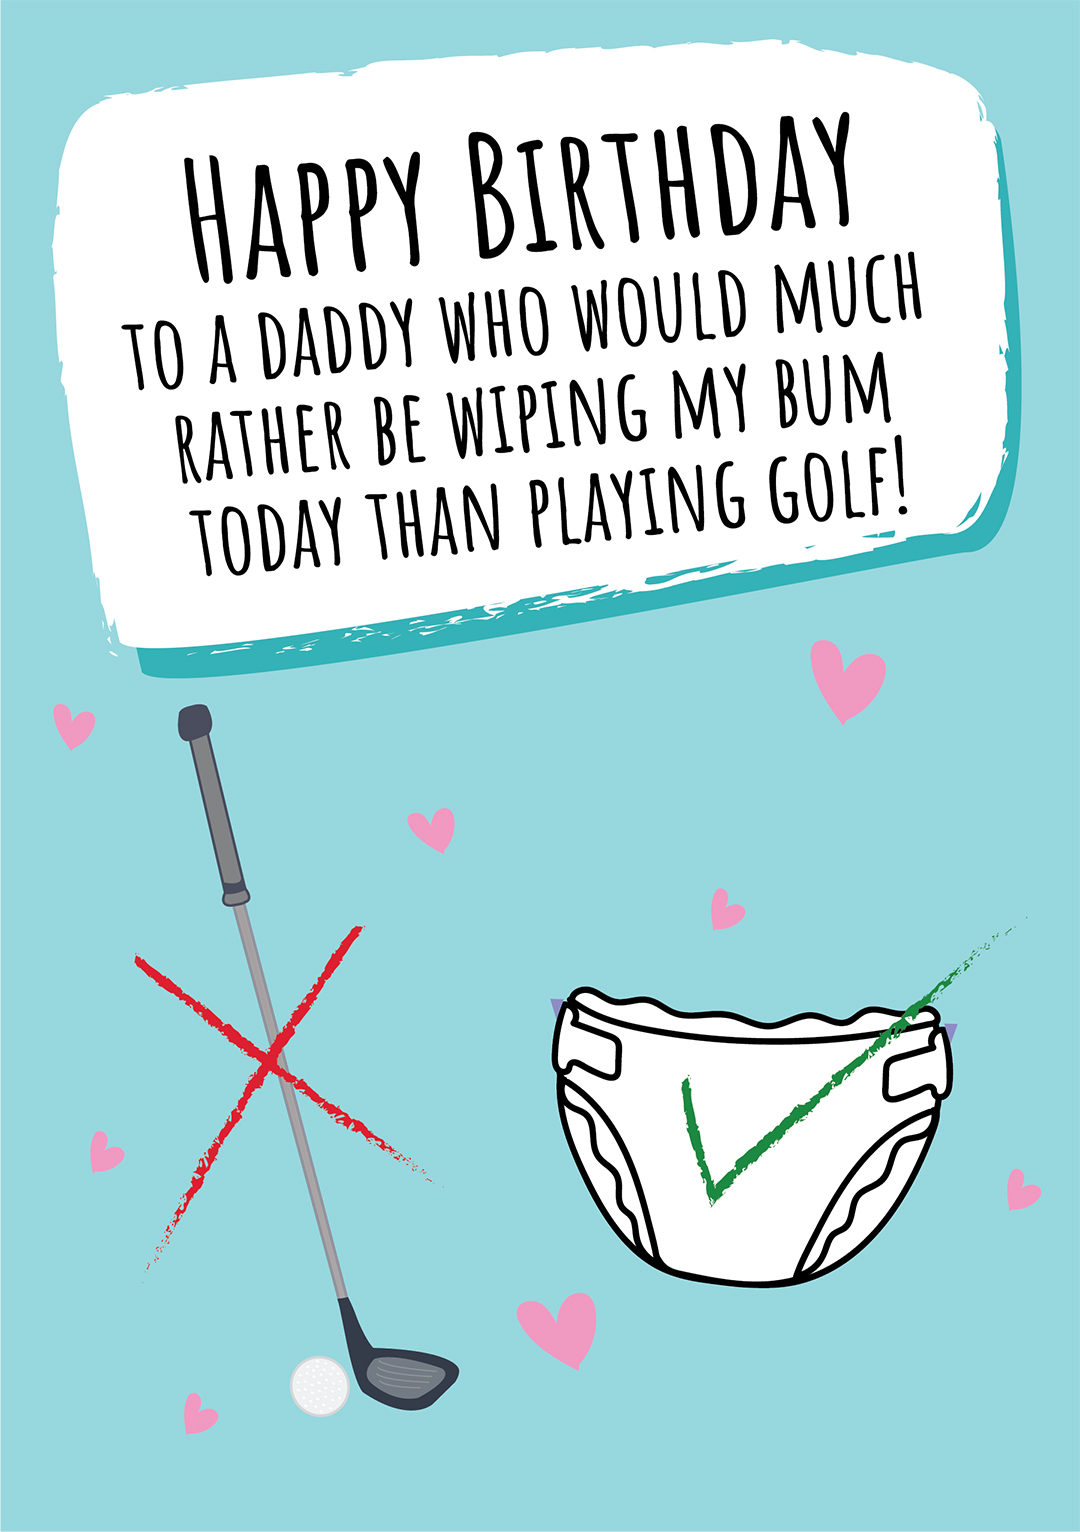 Happy Birthday Daddy - Wiping Bum vs Playing Golf